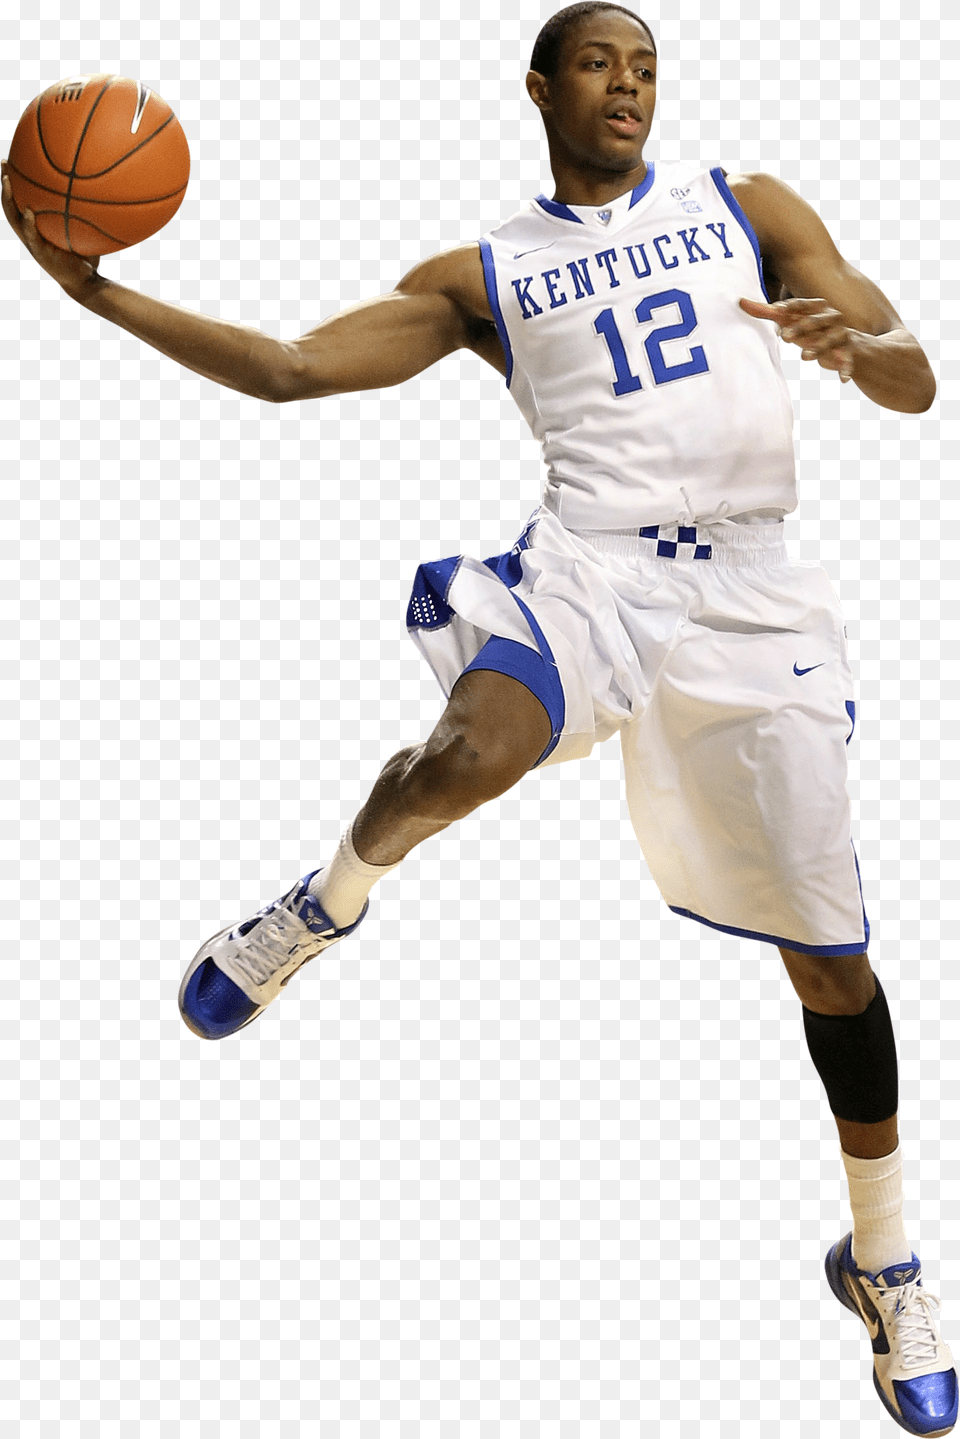 Kentucky Basketball Player Clipart Graphic Library Kentucky Basketball Players, Sport, Ball, Basketball (ball), Playing Basketball Png